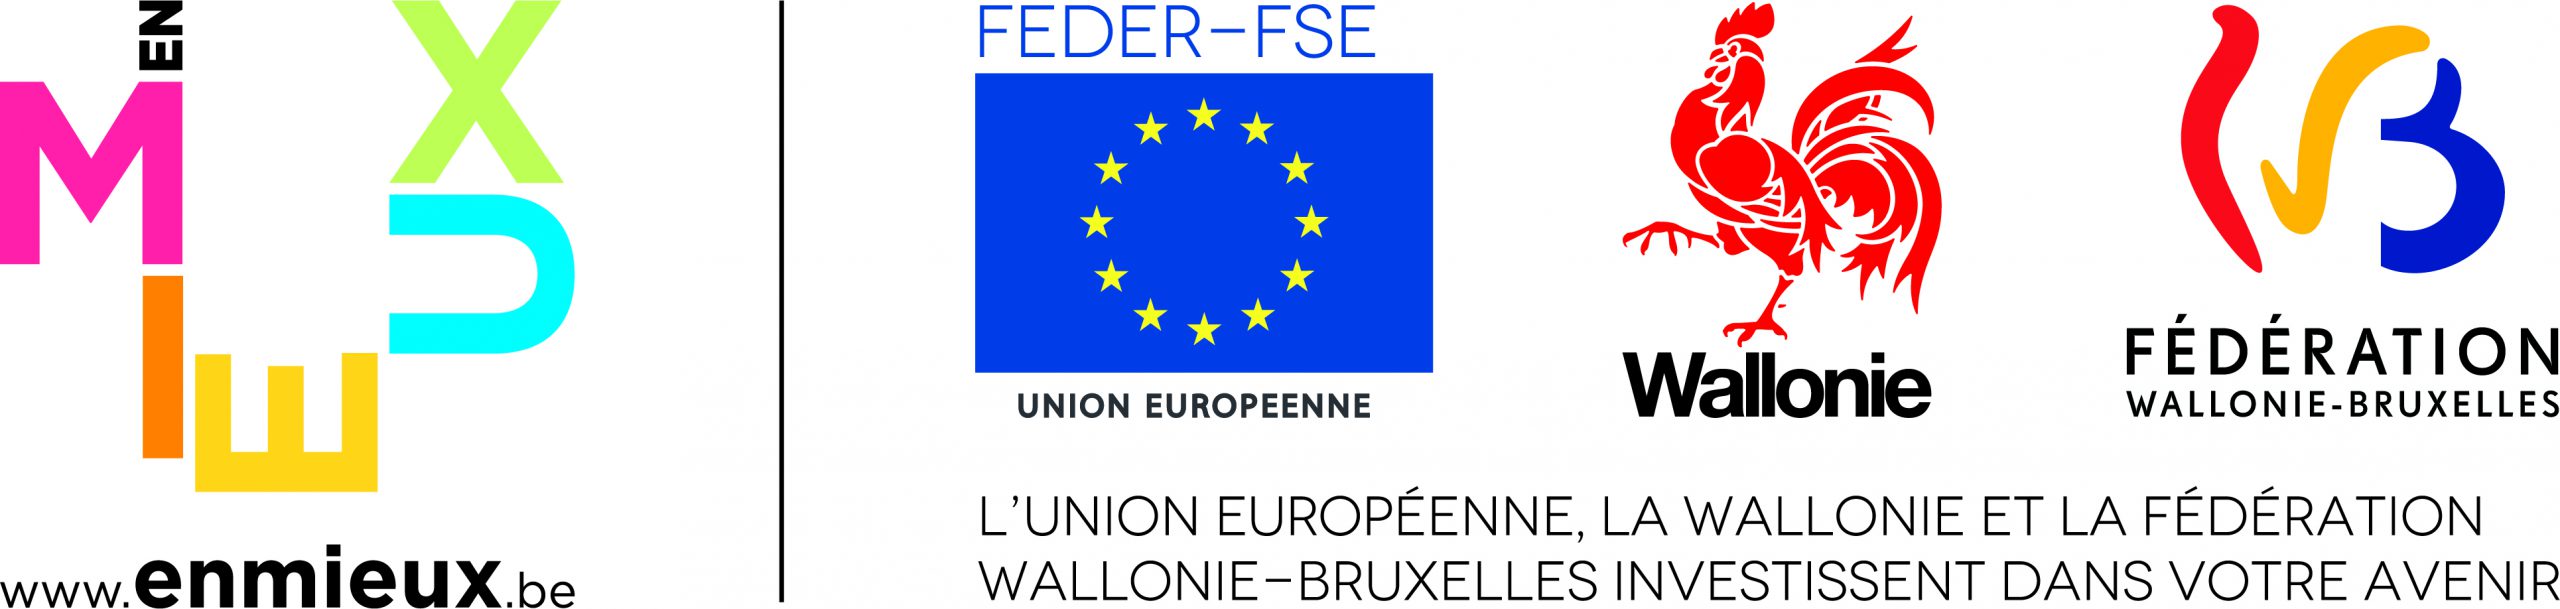 Logo enmieux, feder-fse, wallonie, fédération wallonie-bruxelles